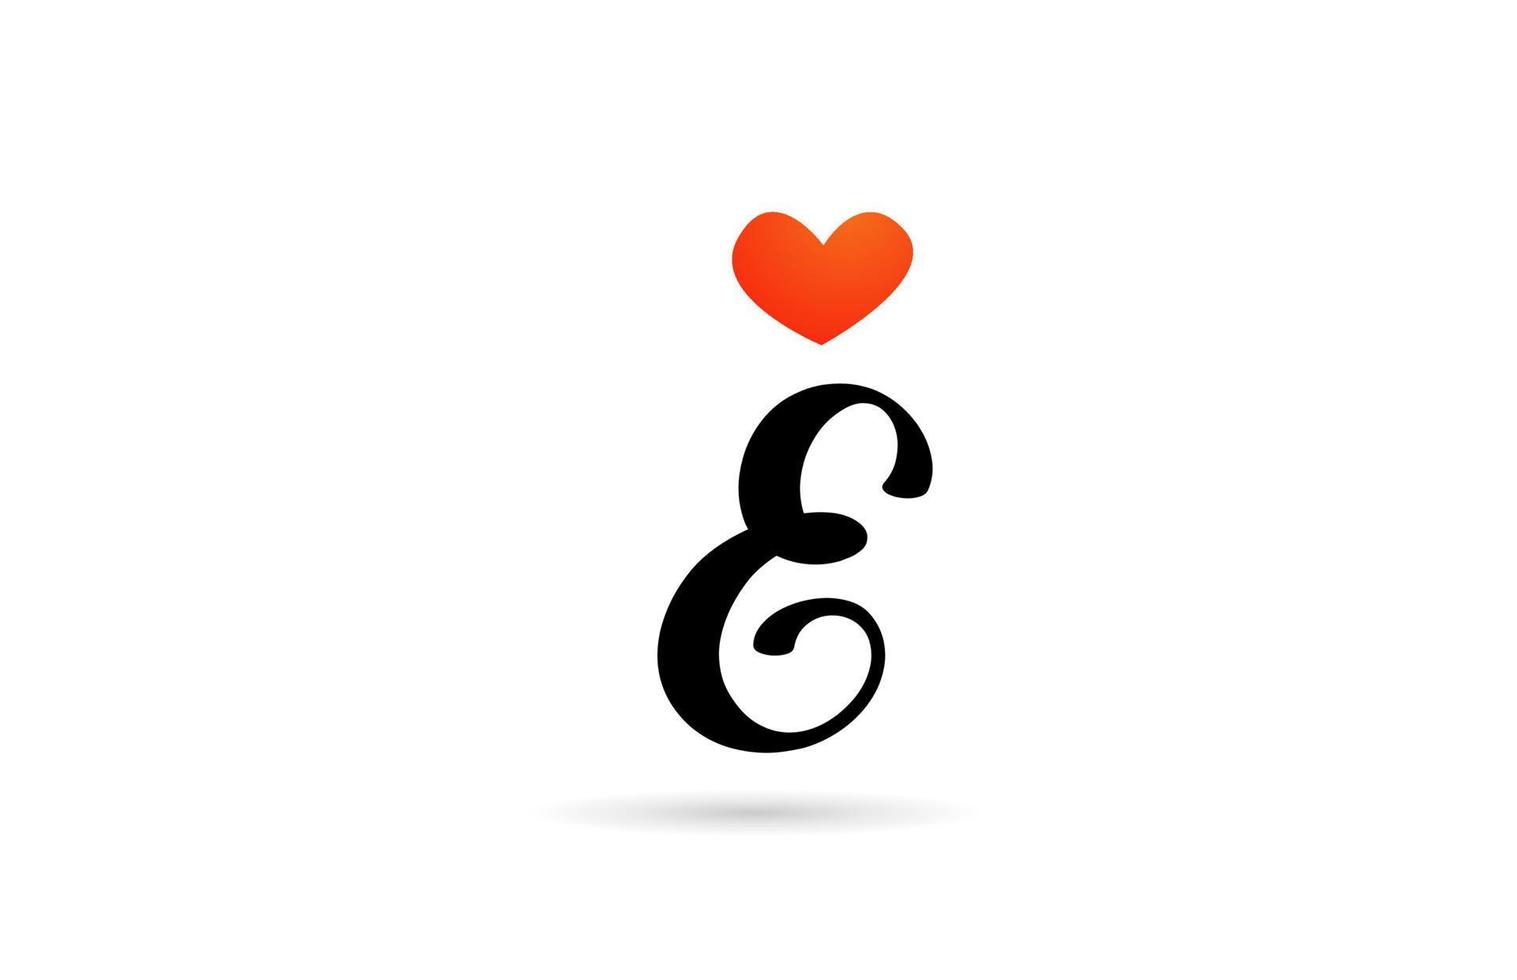 handwritten e alphabet letter icon logo design creative template for business with love heart vector